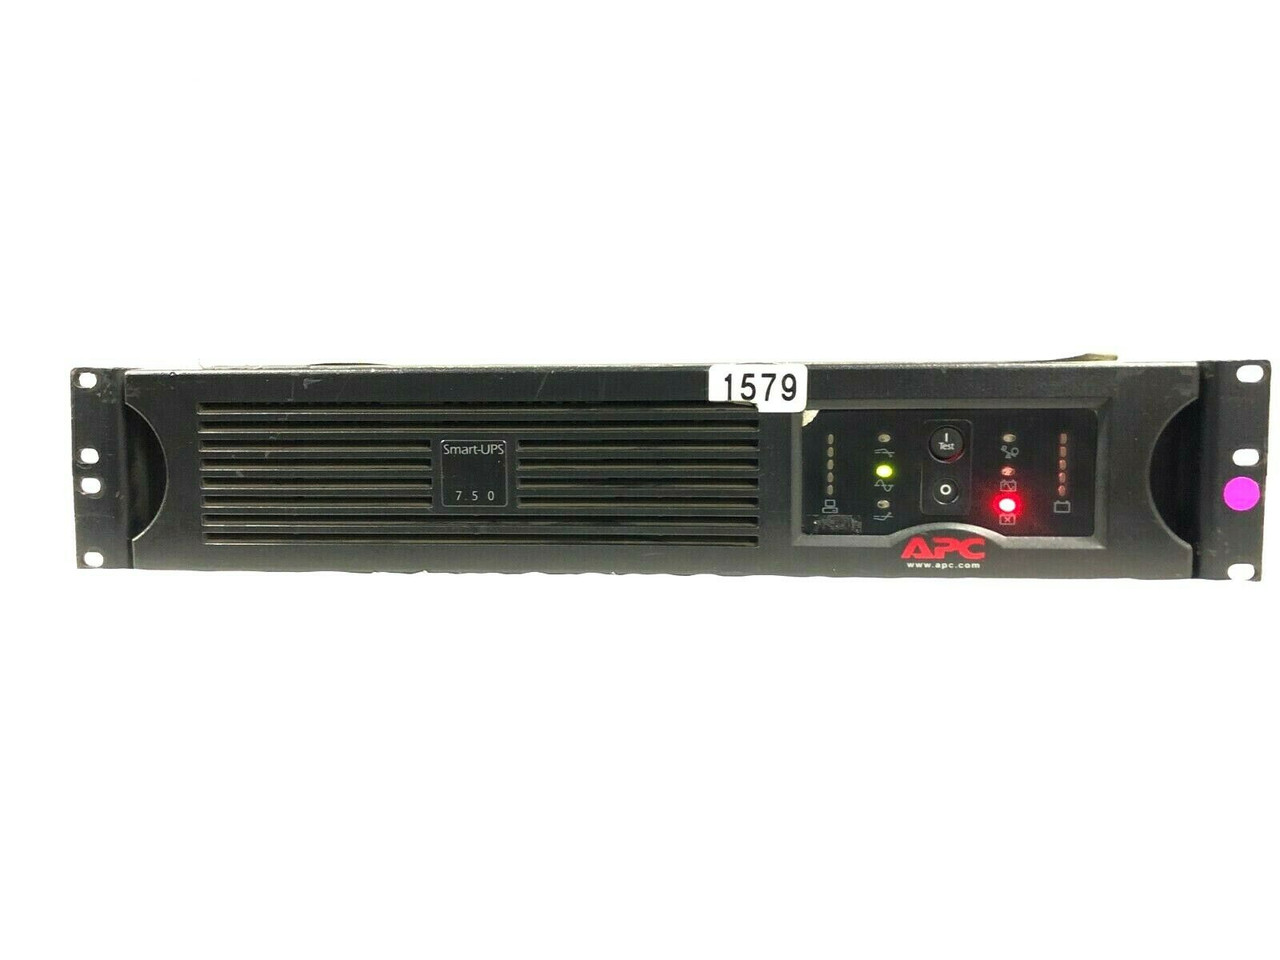 UPS 750 APC Smart Power Supply (One) -1579 - True Heart Sound